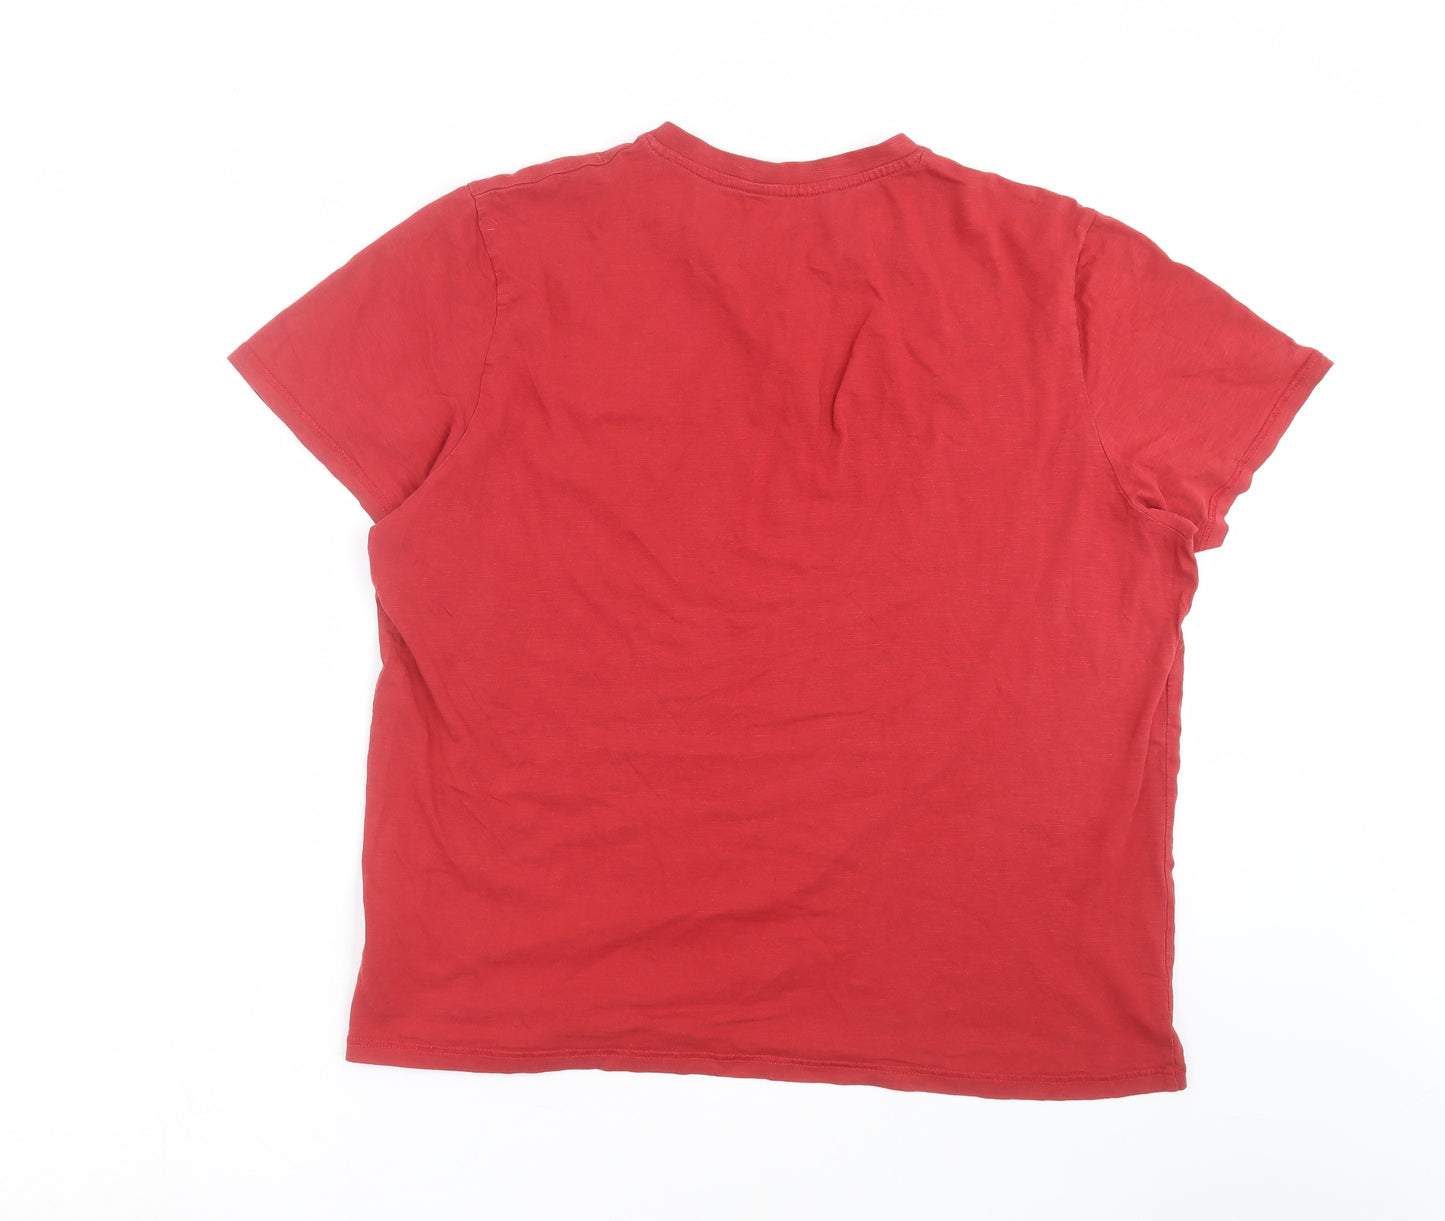 Debenhams Mens Red Solid   Pyjama Top Size L